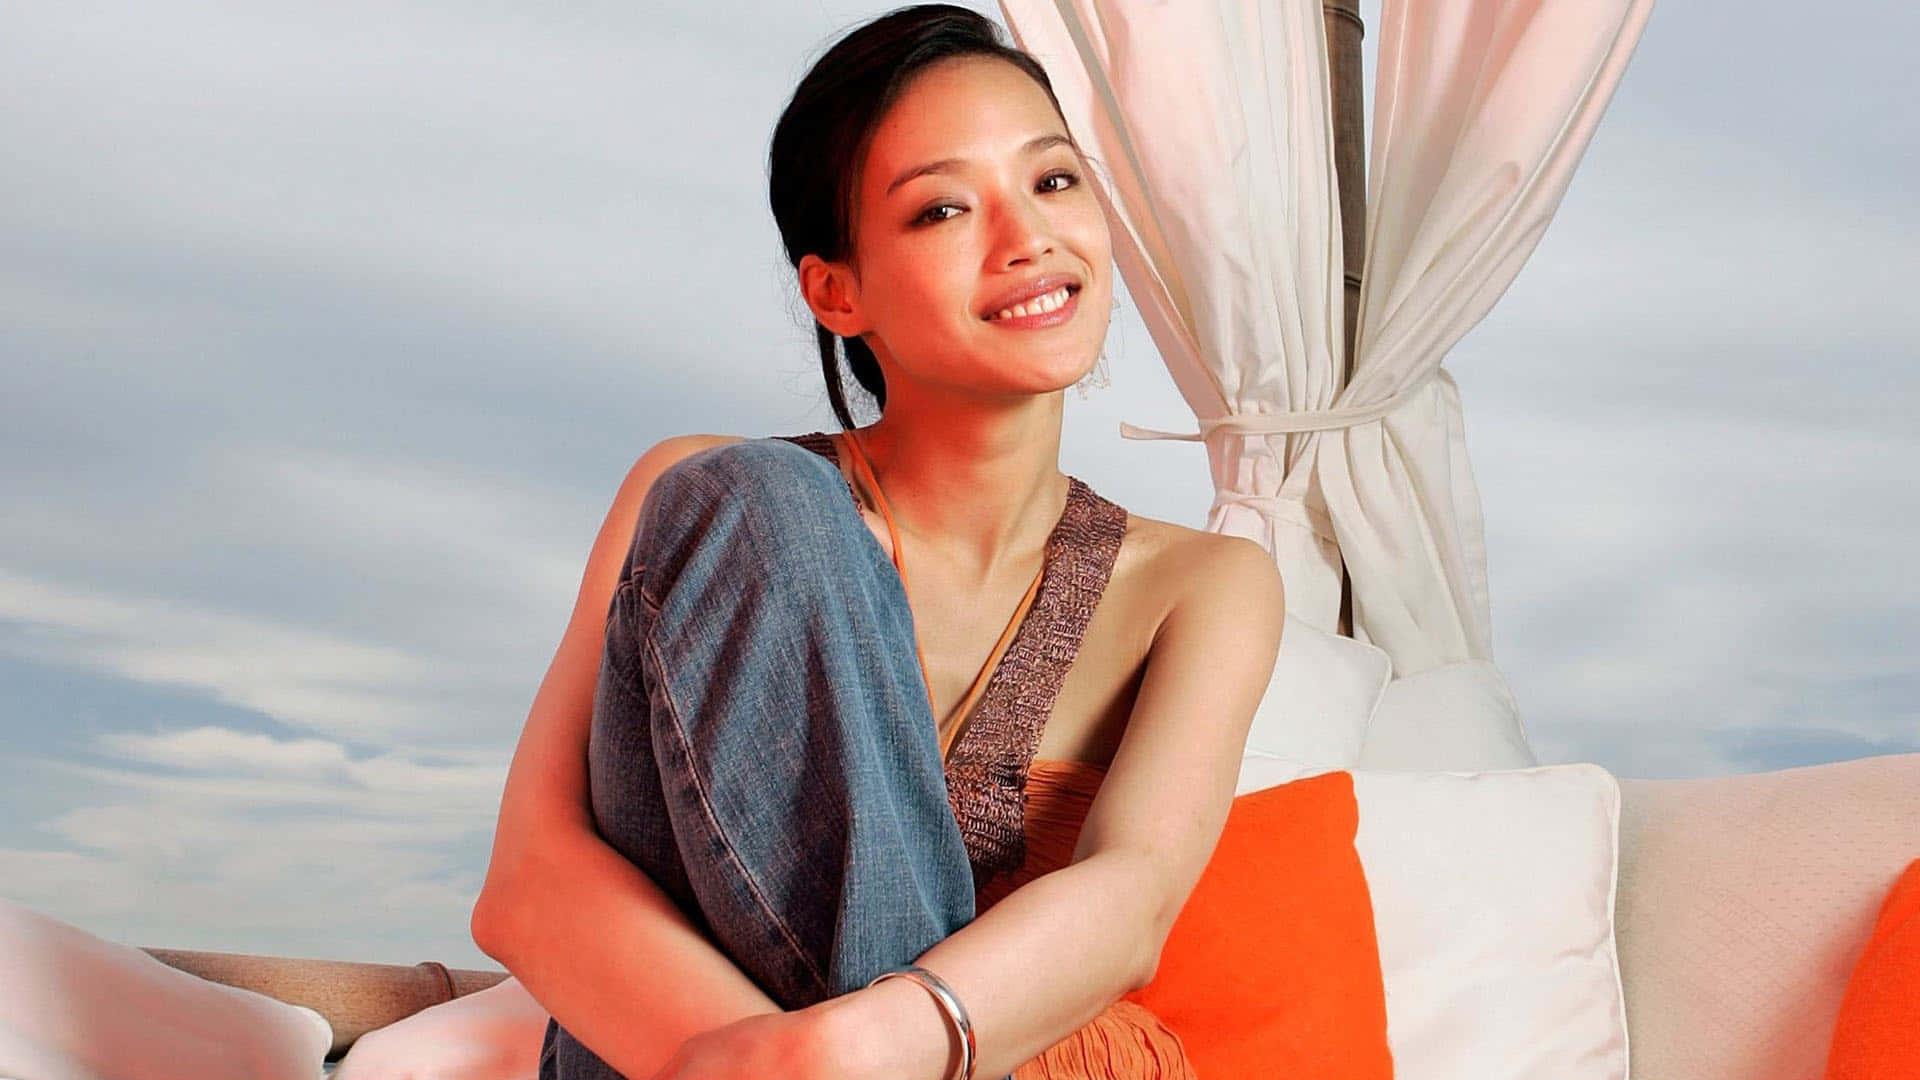 Shu Qi Posing Elegantly in Chic Outfit Wallpaper